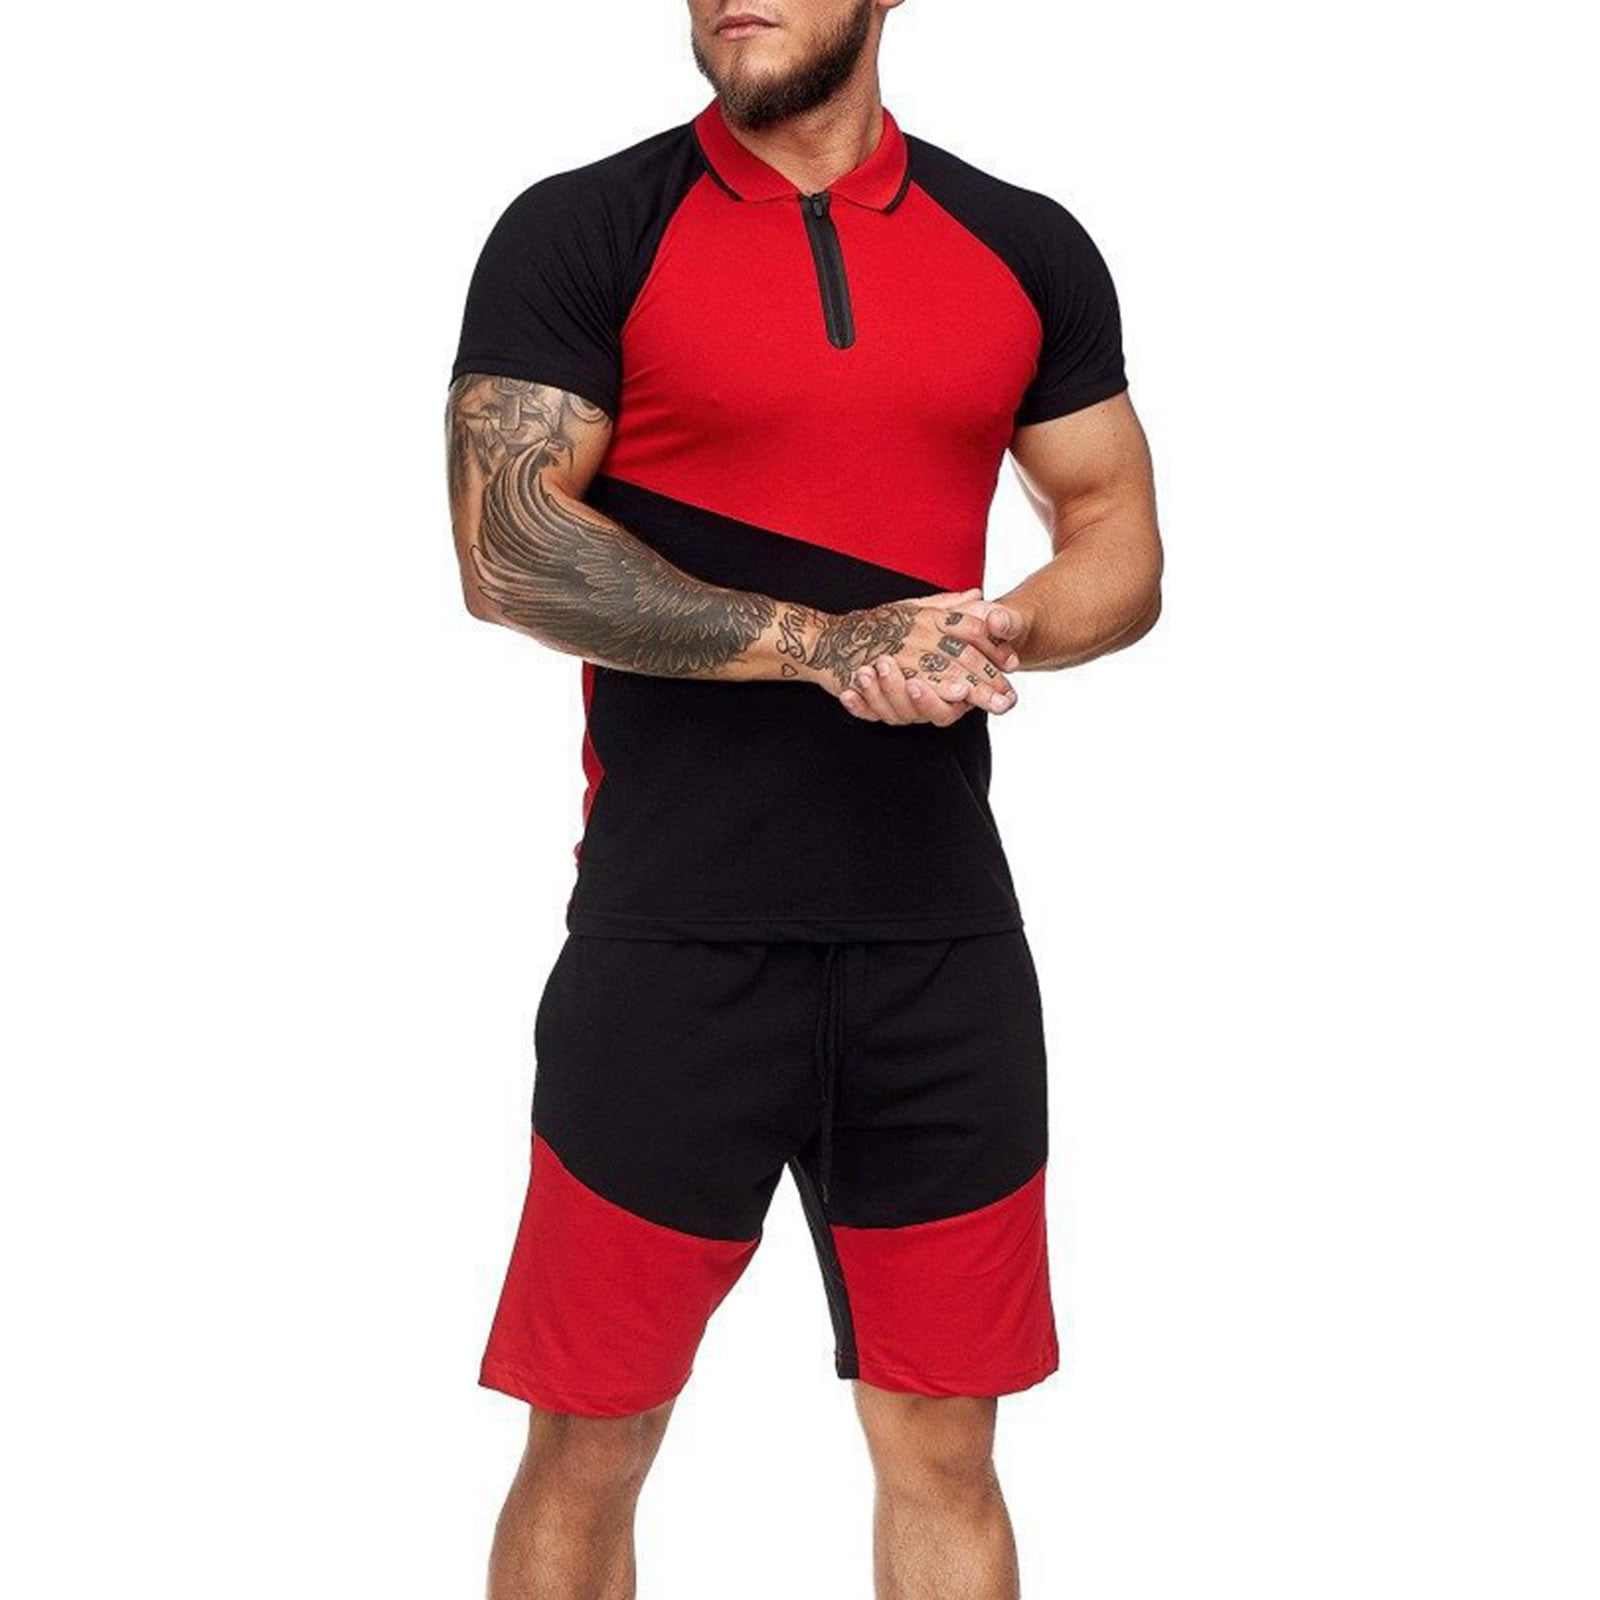 Summer Mens Casual T-Shirts and Shorts Running Jogging Athletic Sports Set 